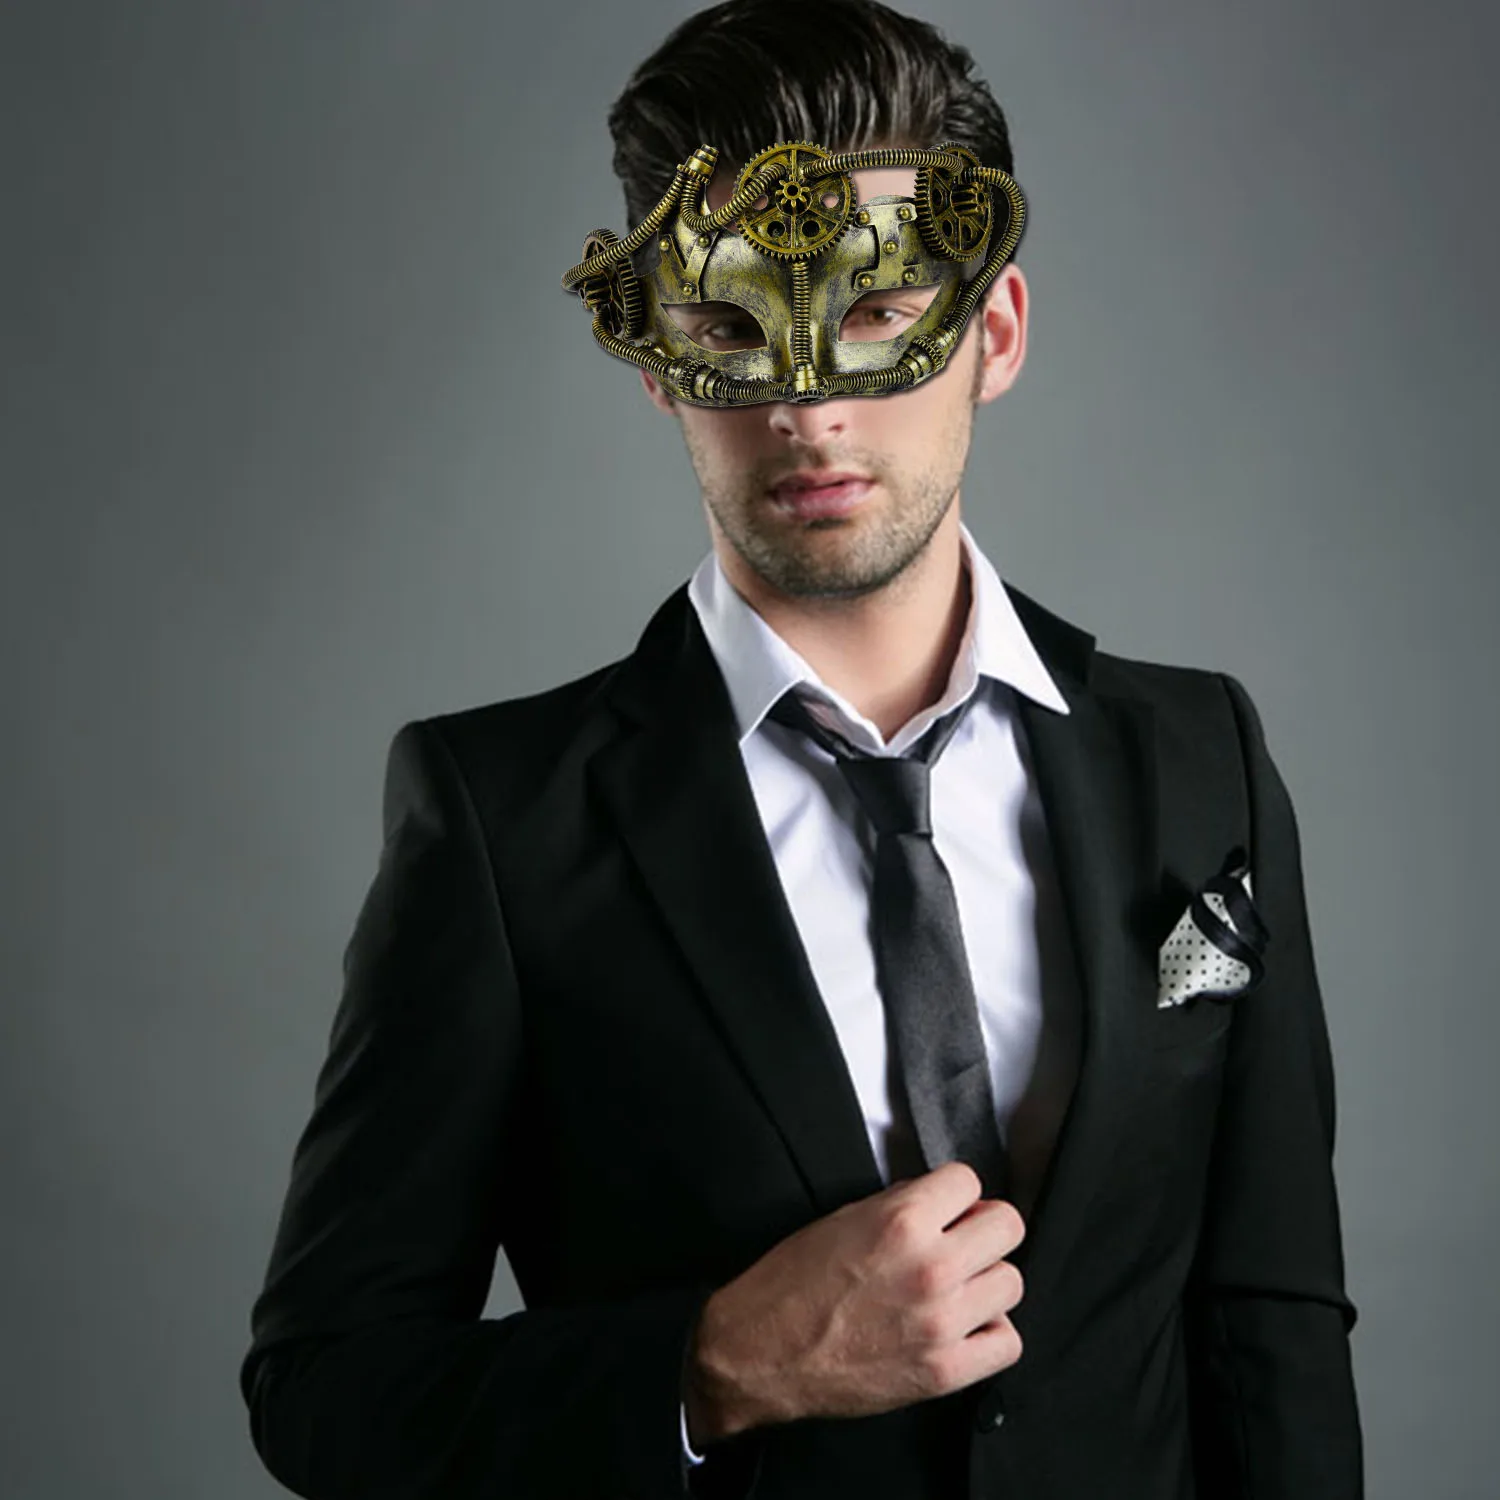 Handsome-Costume-Mask-Halloween-Party-Half-Face-Steampunk-Vintage-Opera-Masquerade-Mask-For-Men.jpg